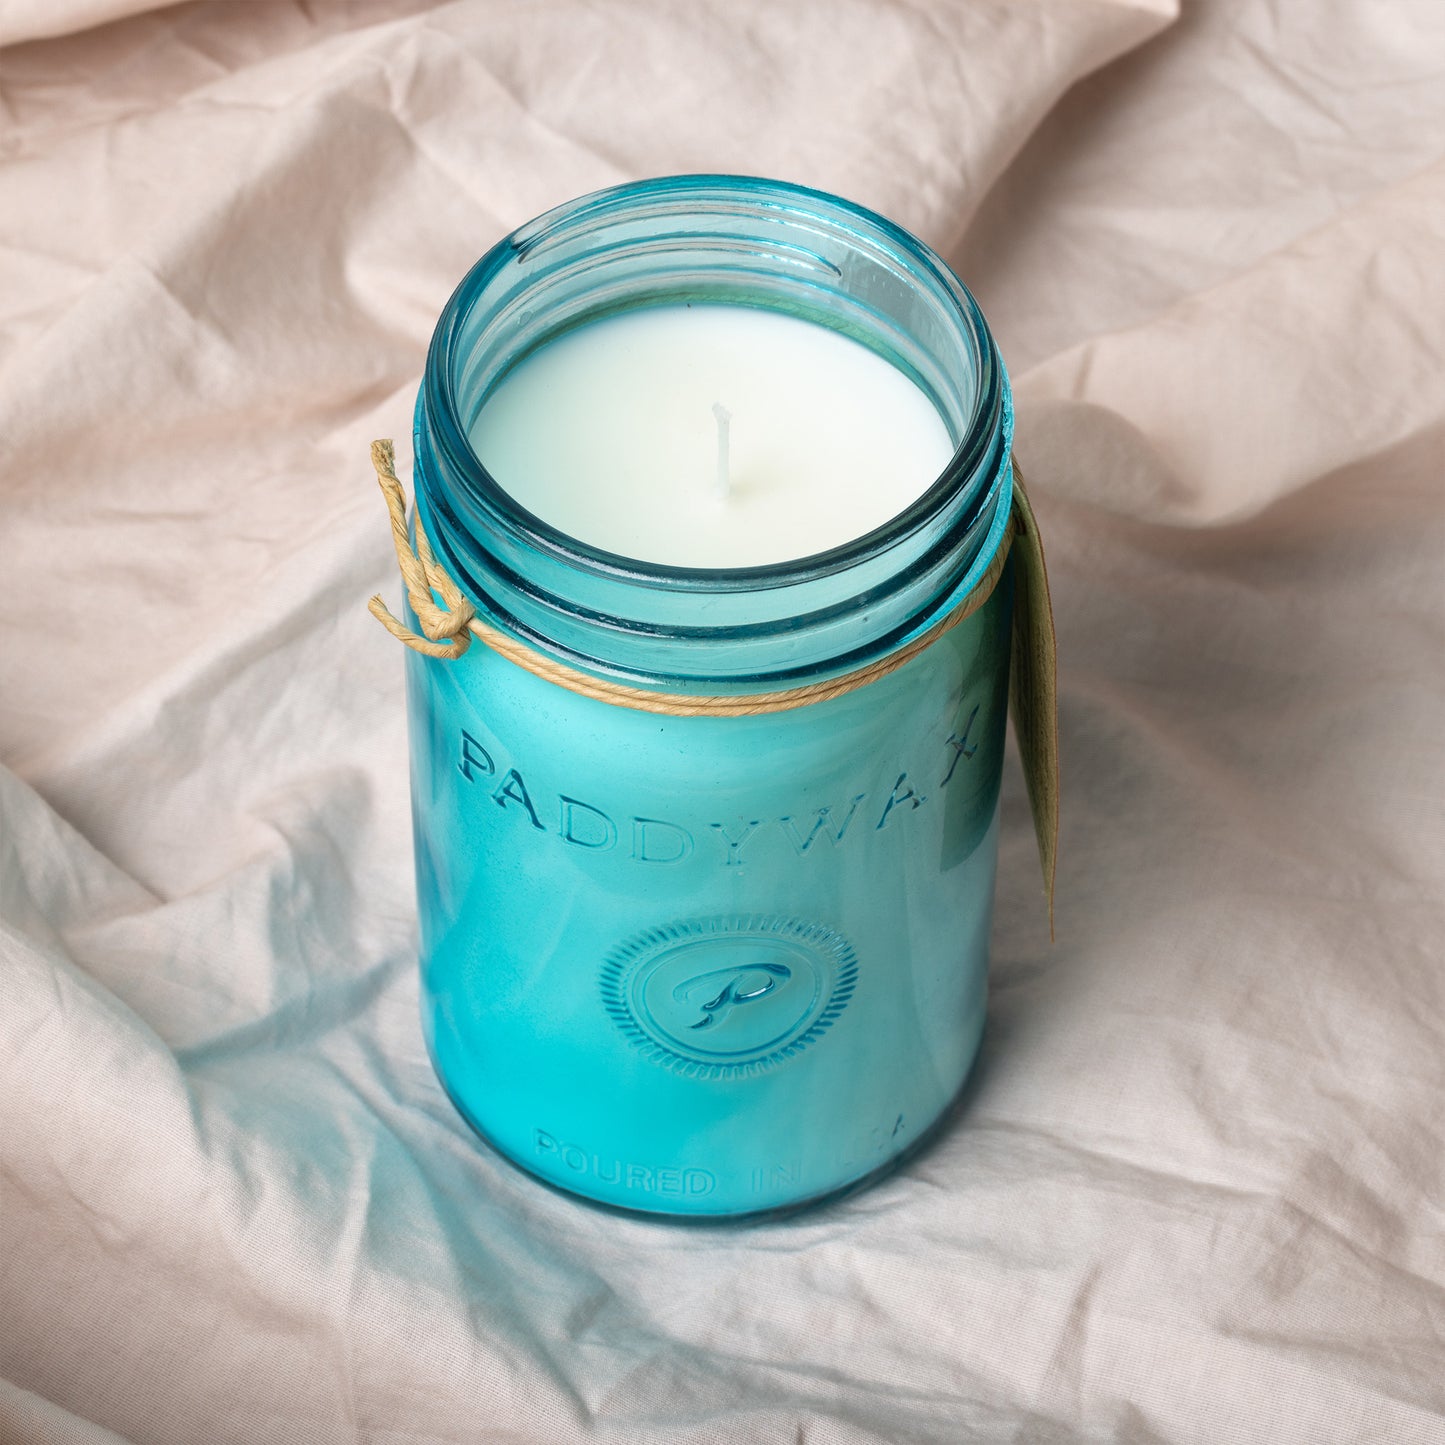 Relish 9.5 oz Candle - Ocean Tide + Sea Salt